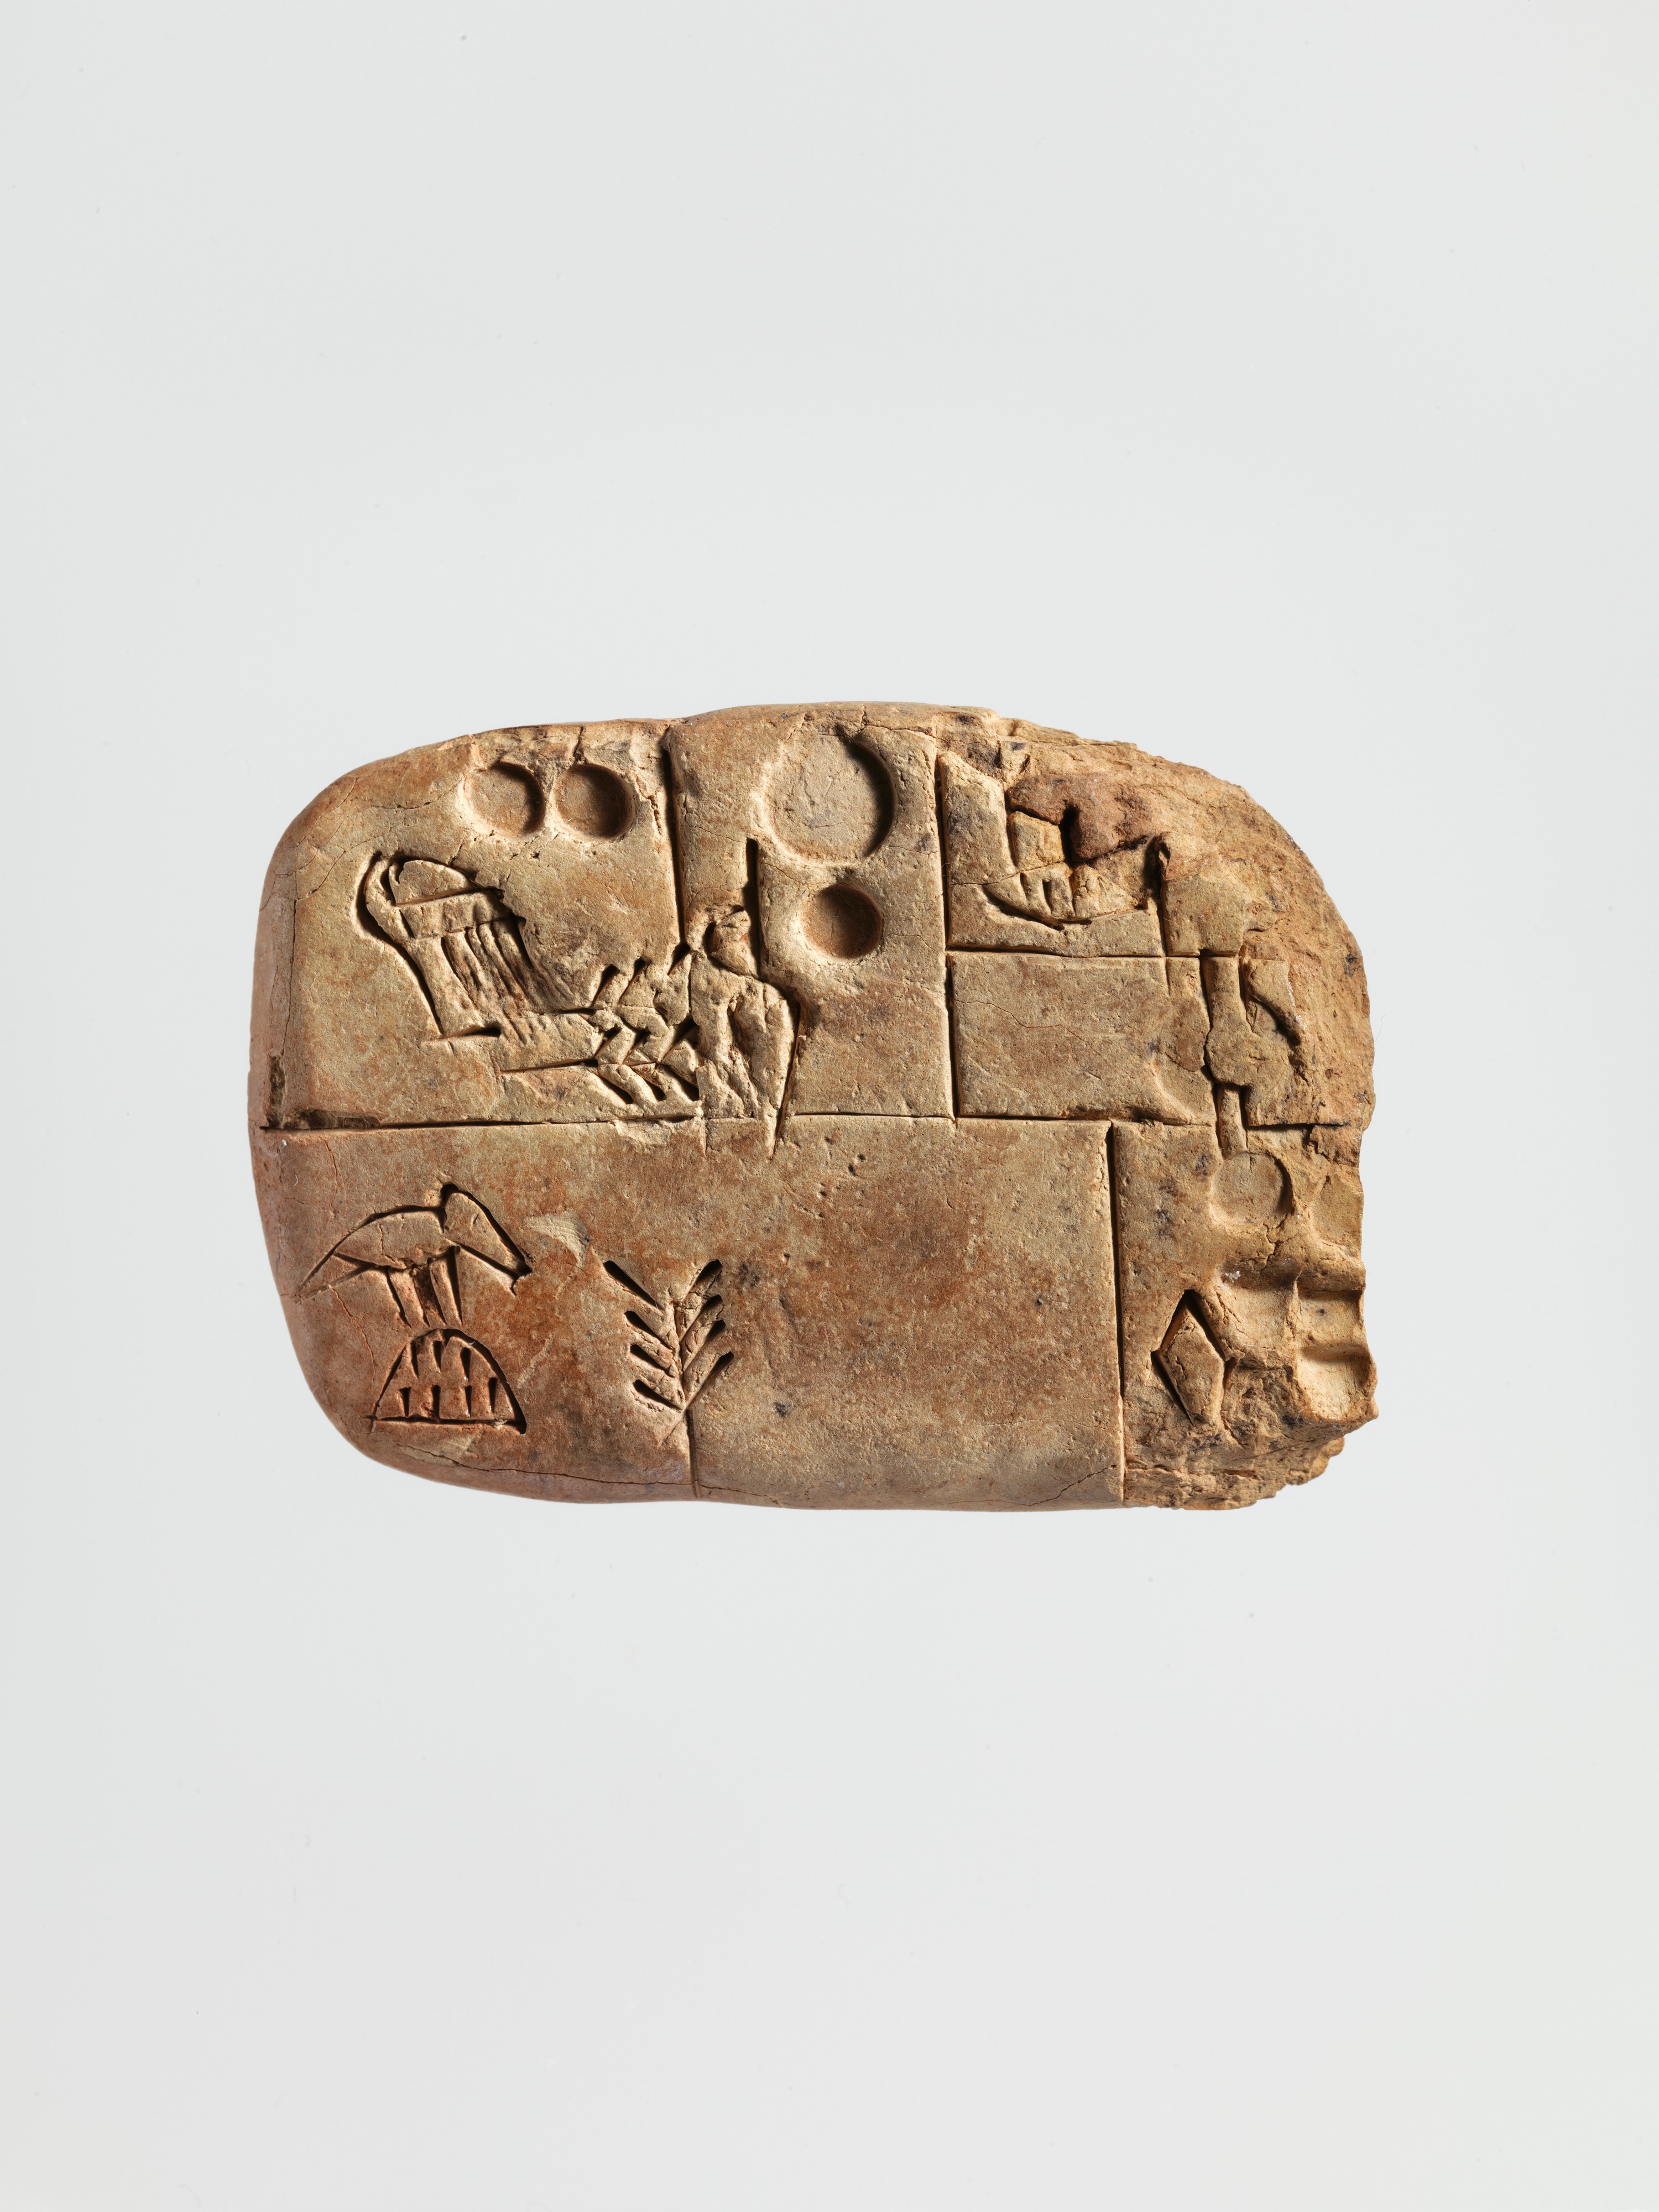 ancient sumerian writing